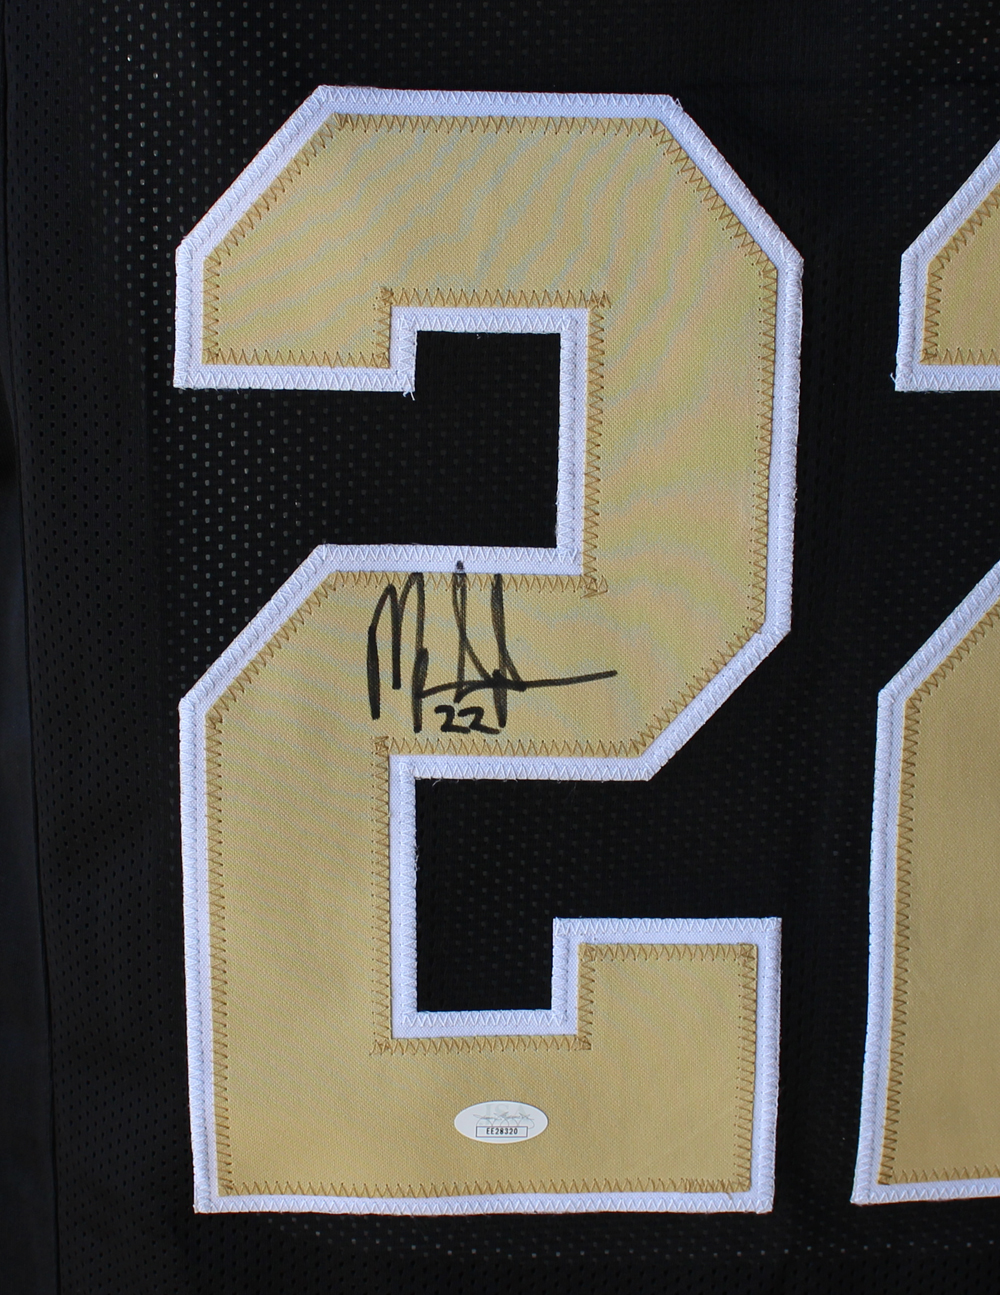 Mark Ingram Autographed New Orleans Saints Black XL Jersey JSA